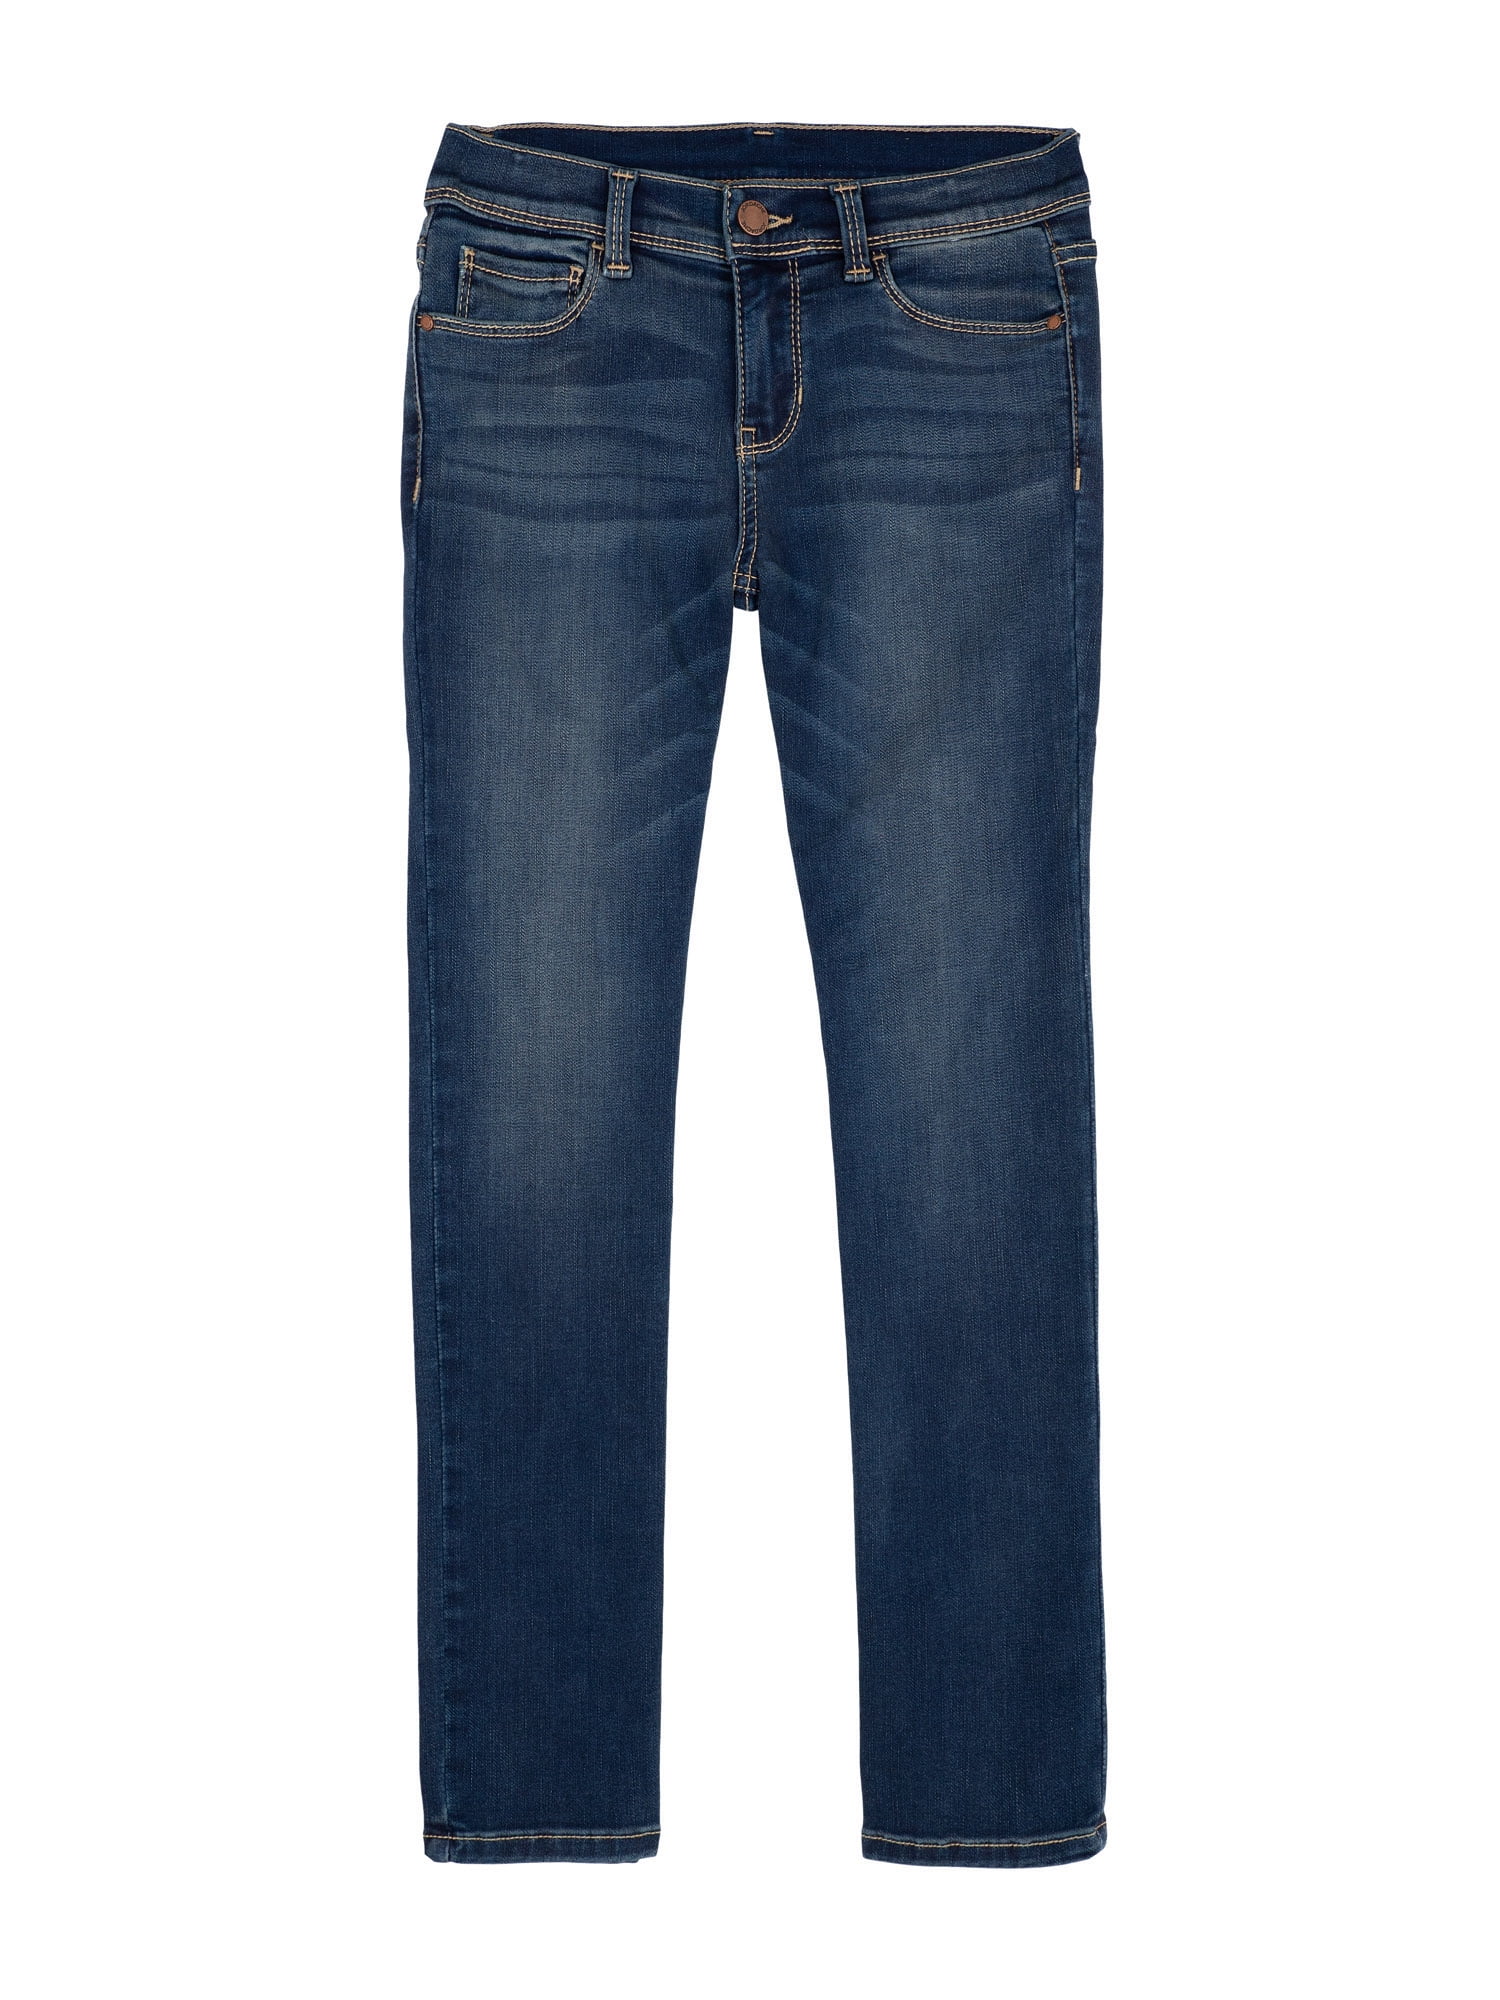 Jordache - Jordache Girls Skinny Jeans, Slim Sizes 5-18 - Walmart.com ...